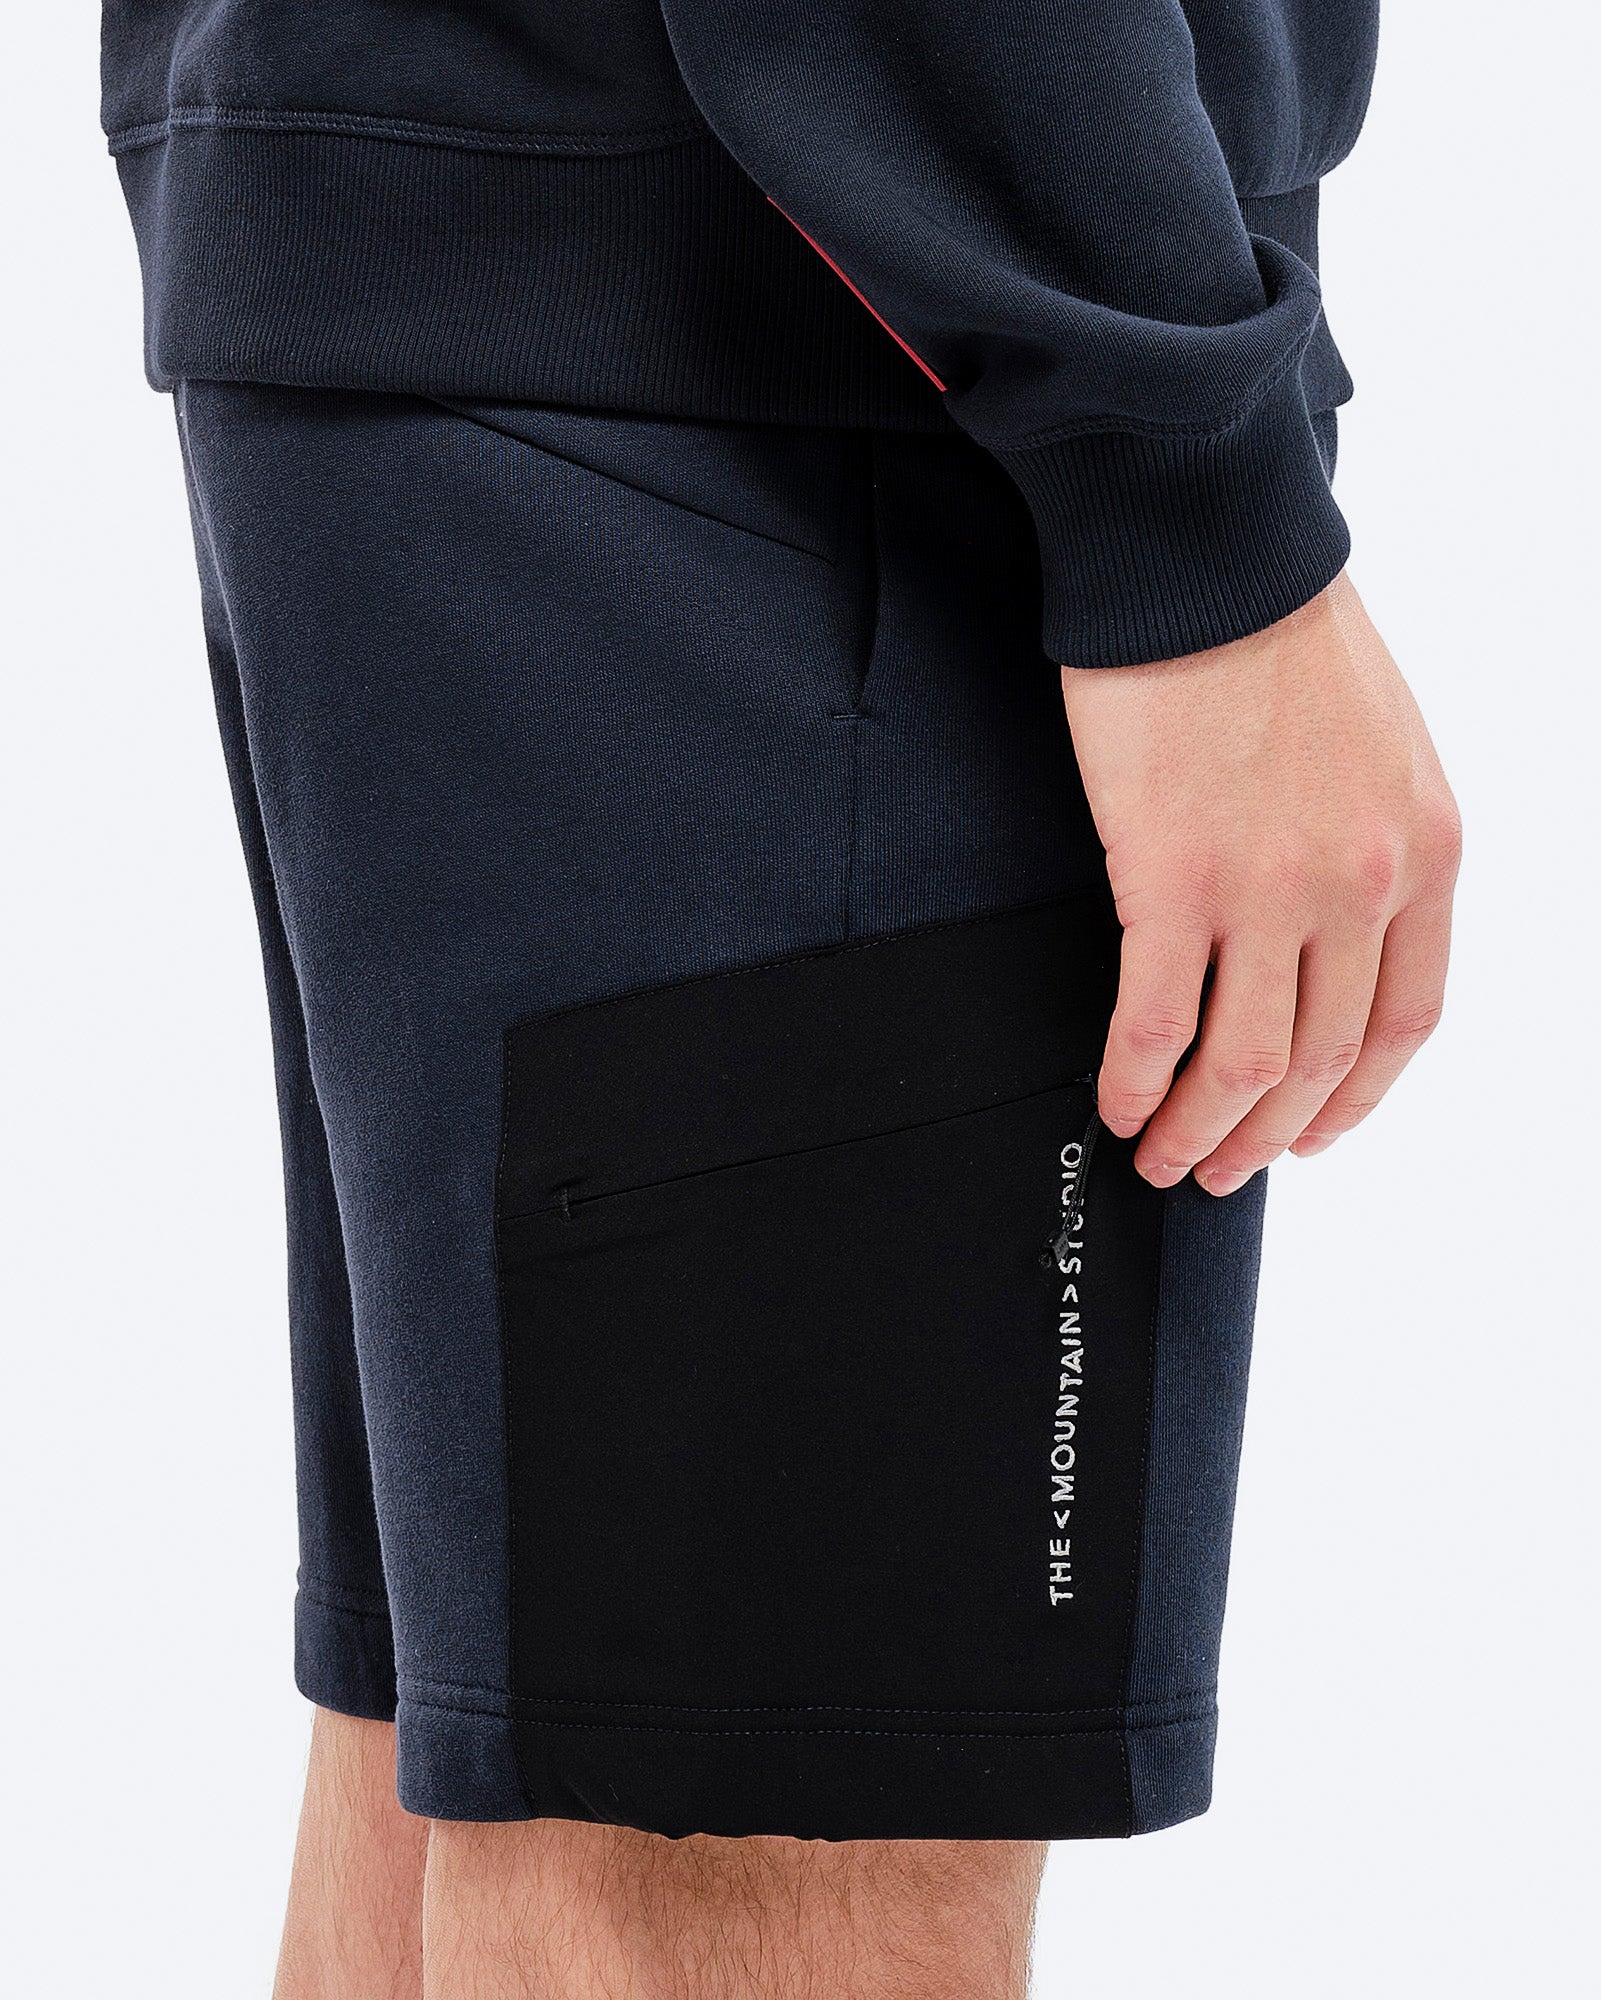 Leg pocket with zip. card image